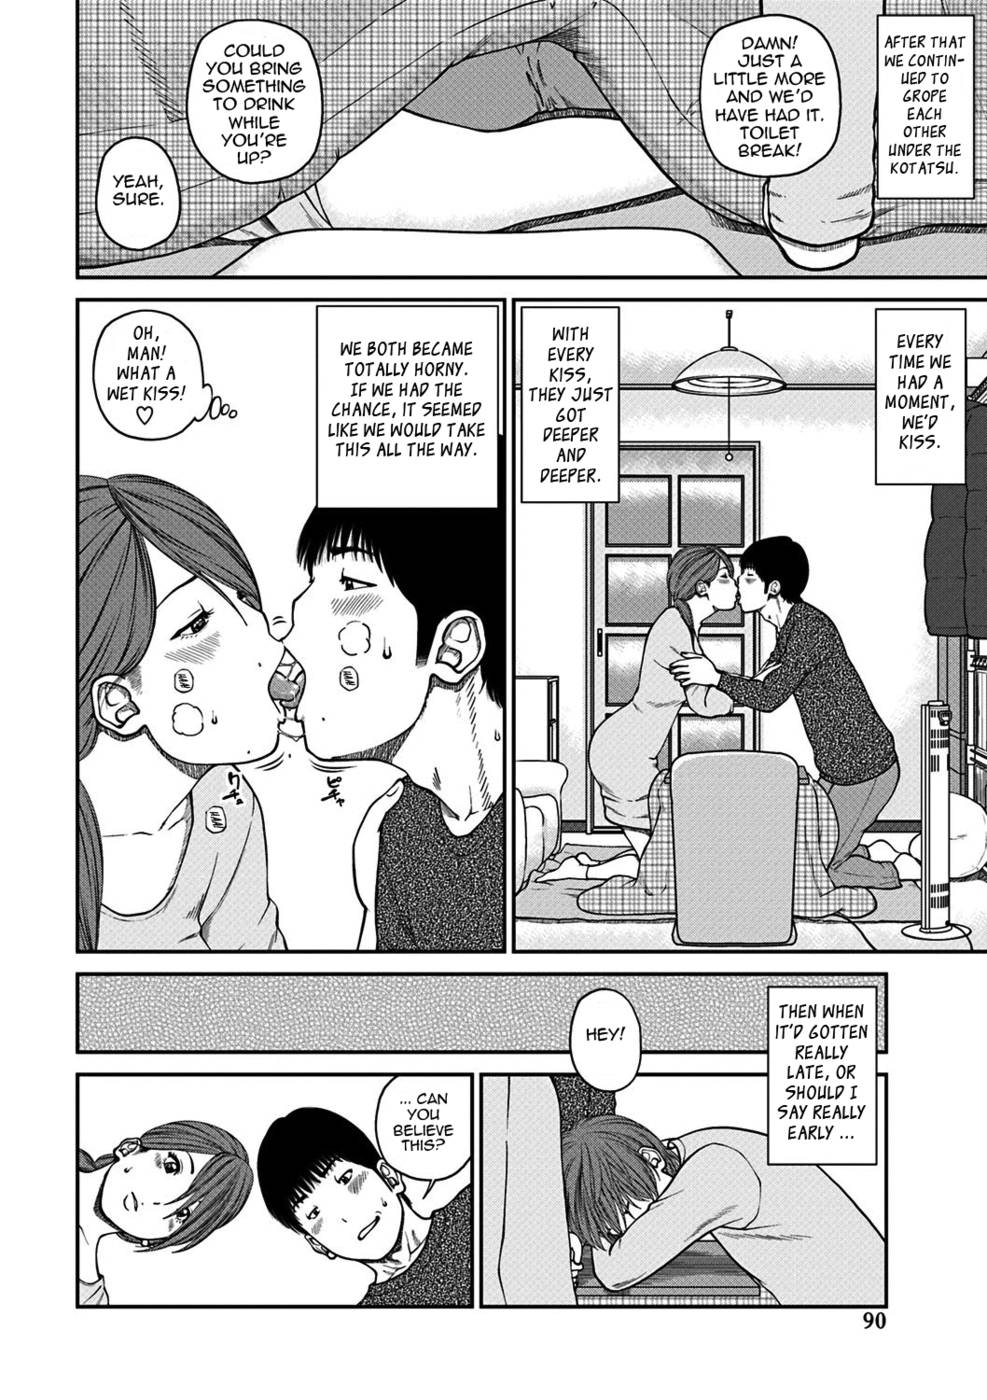 Sexxxxxxxxxxmom - 33 Year Old Unsatisfied Wife-Chapter 5-Under The Kotatsu-Hentai Manga  Hentai Comic - Page: 7 - Online porn video at mobile